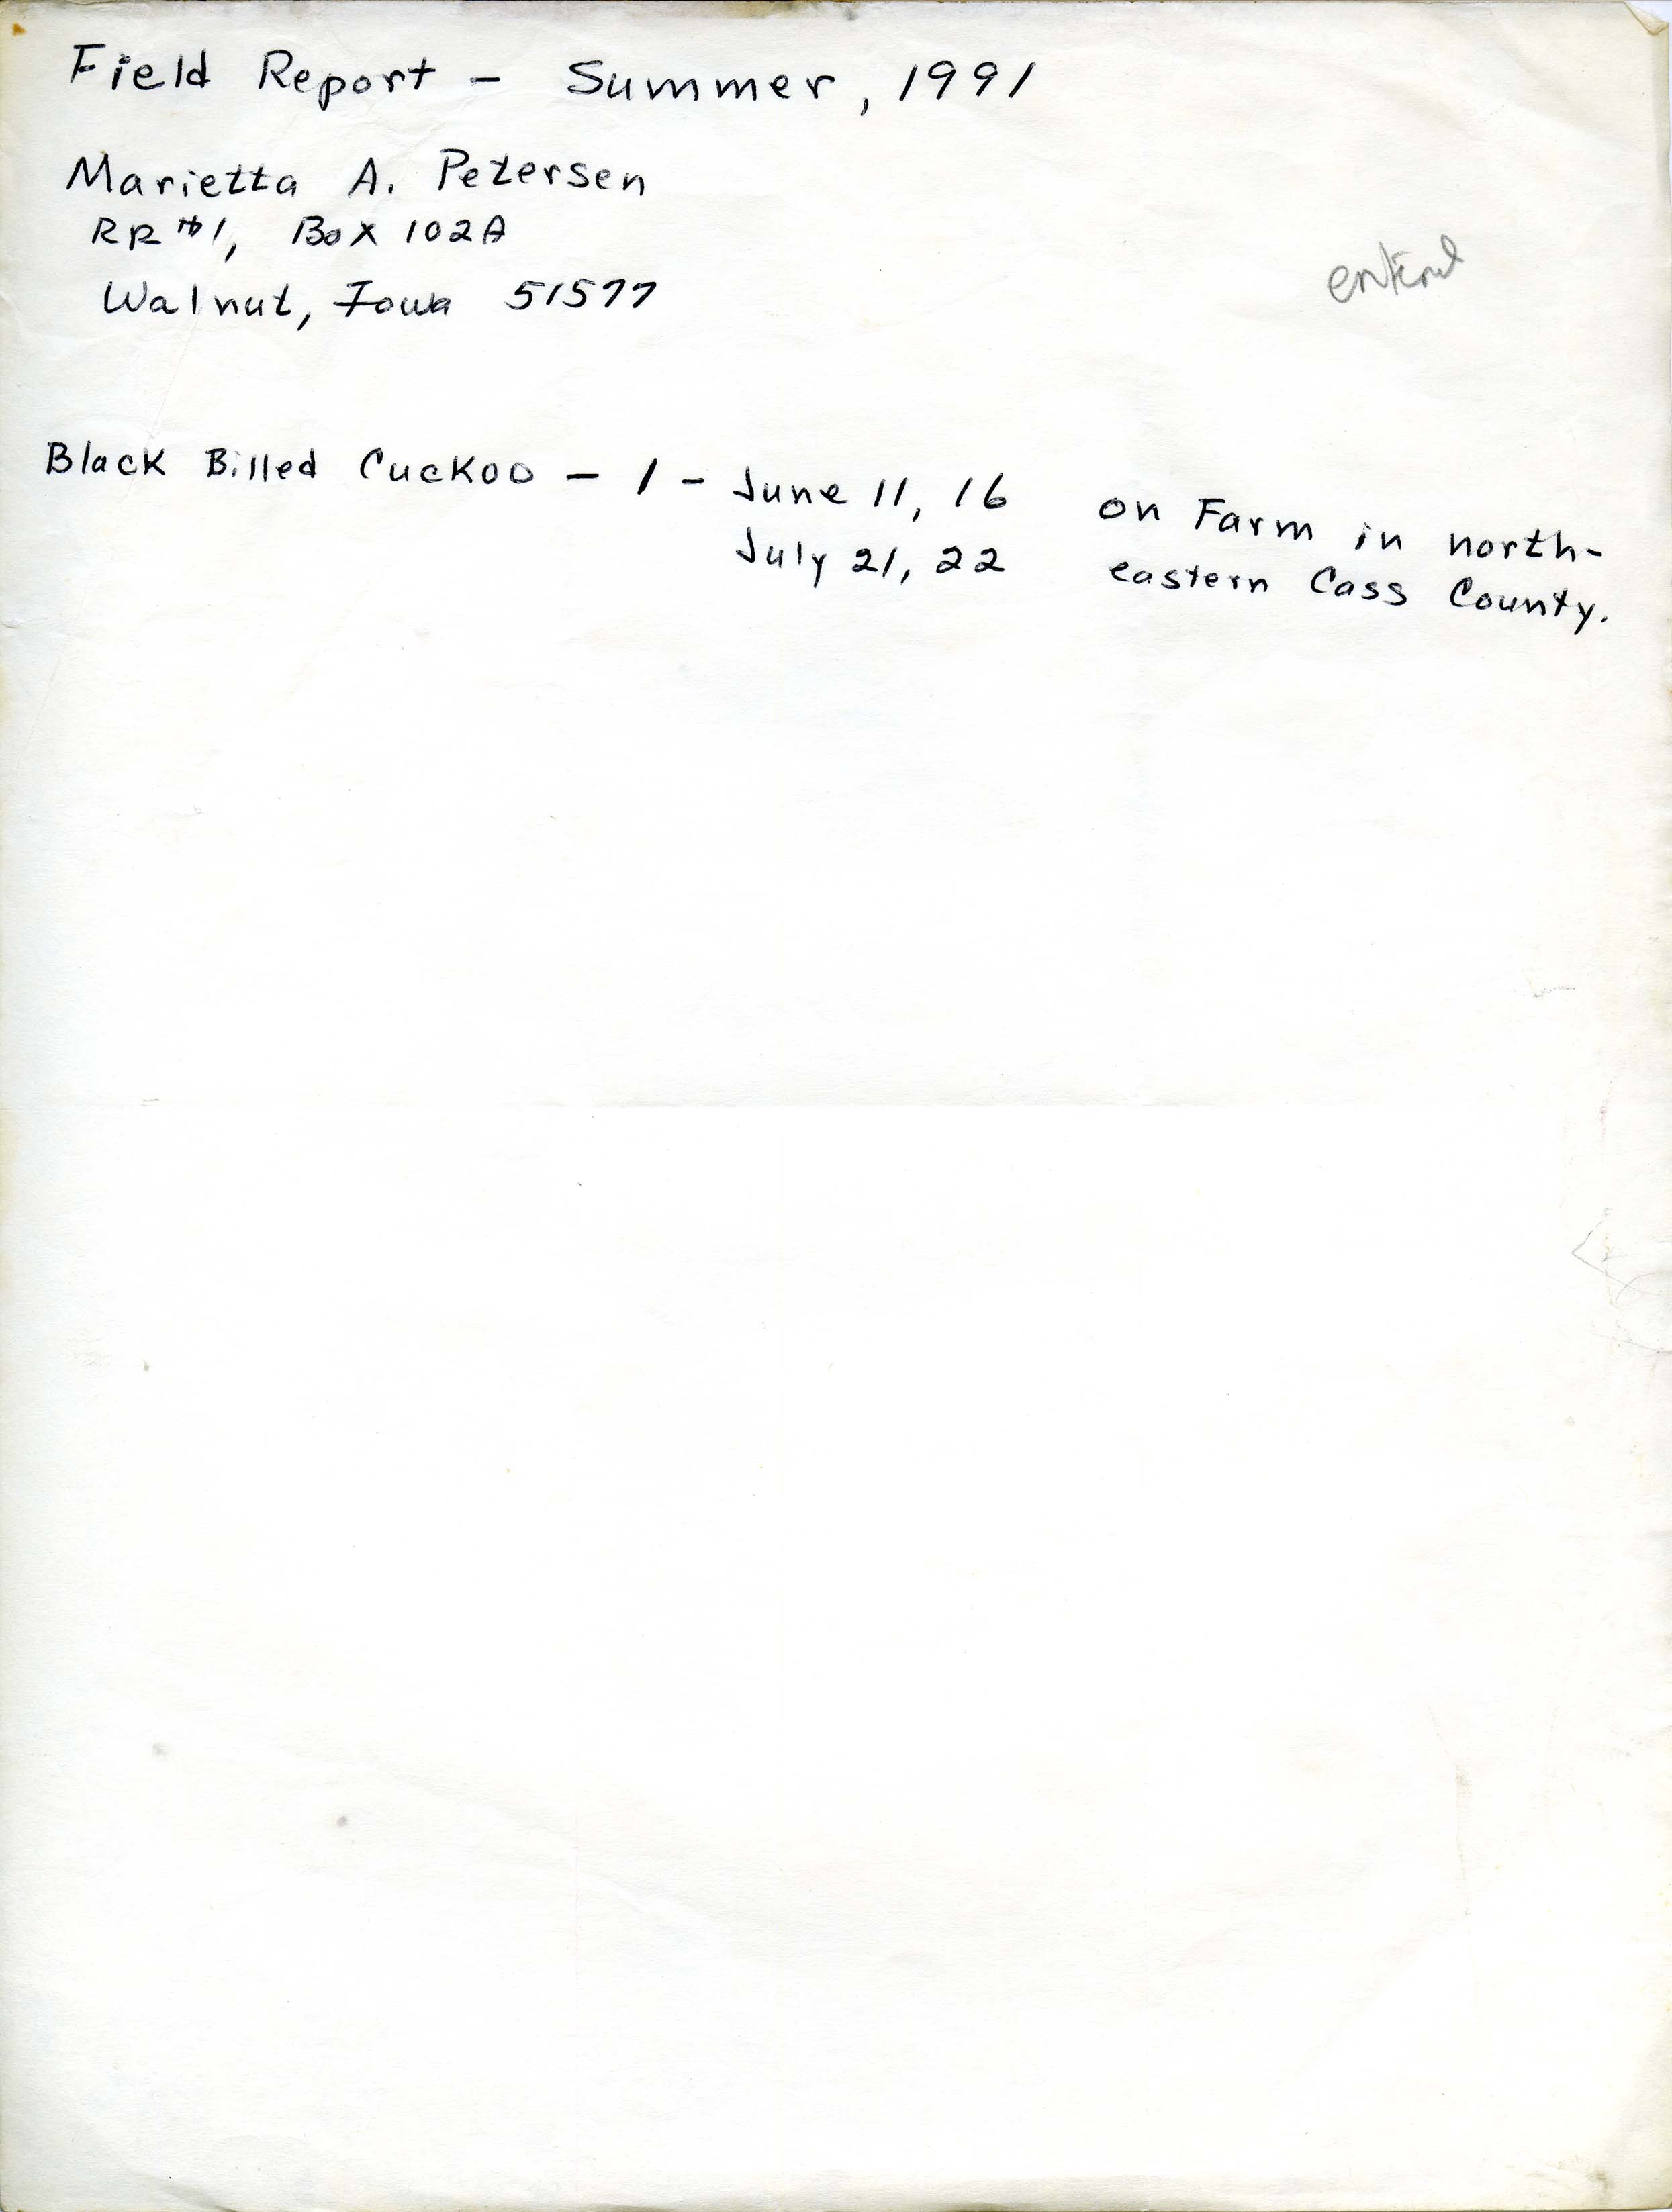 Field notes contributed by Marietta Petersen, summer 1991